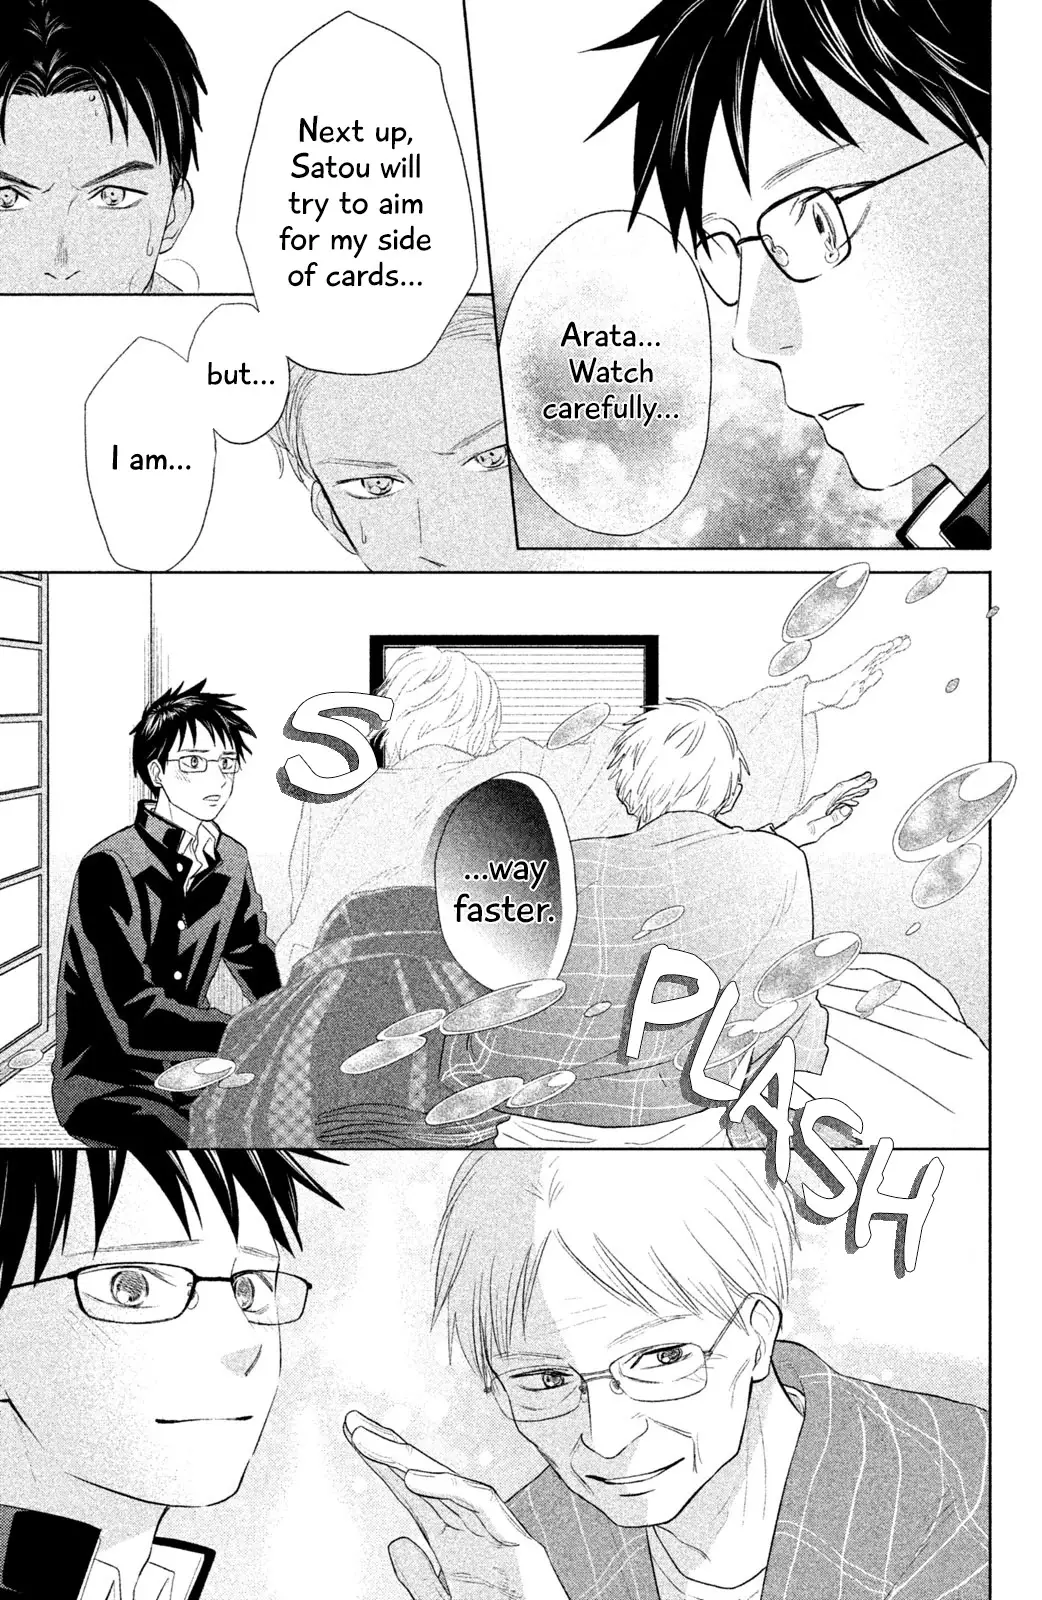 Chihayafuru: Middle School Arc - 9 page 10